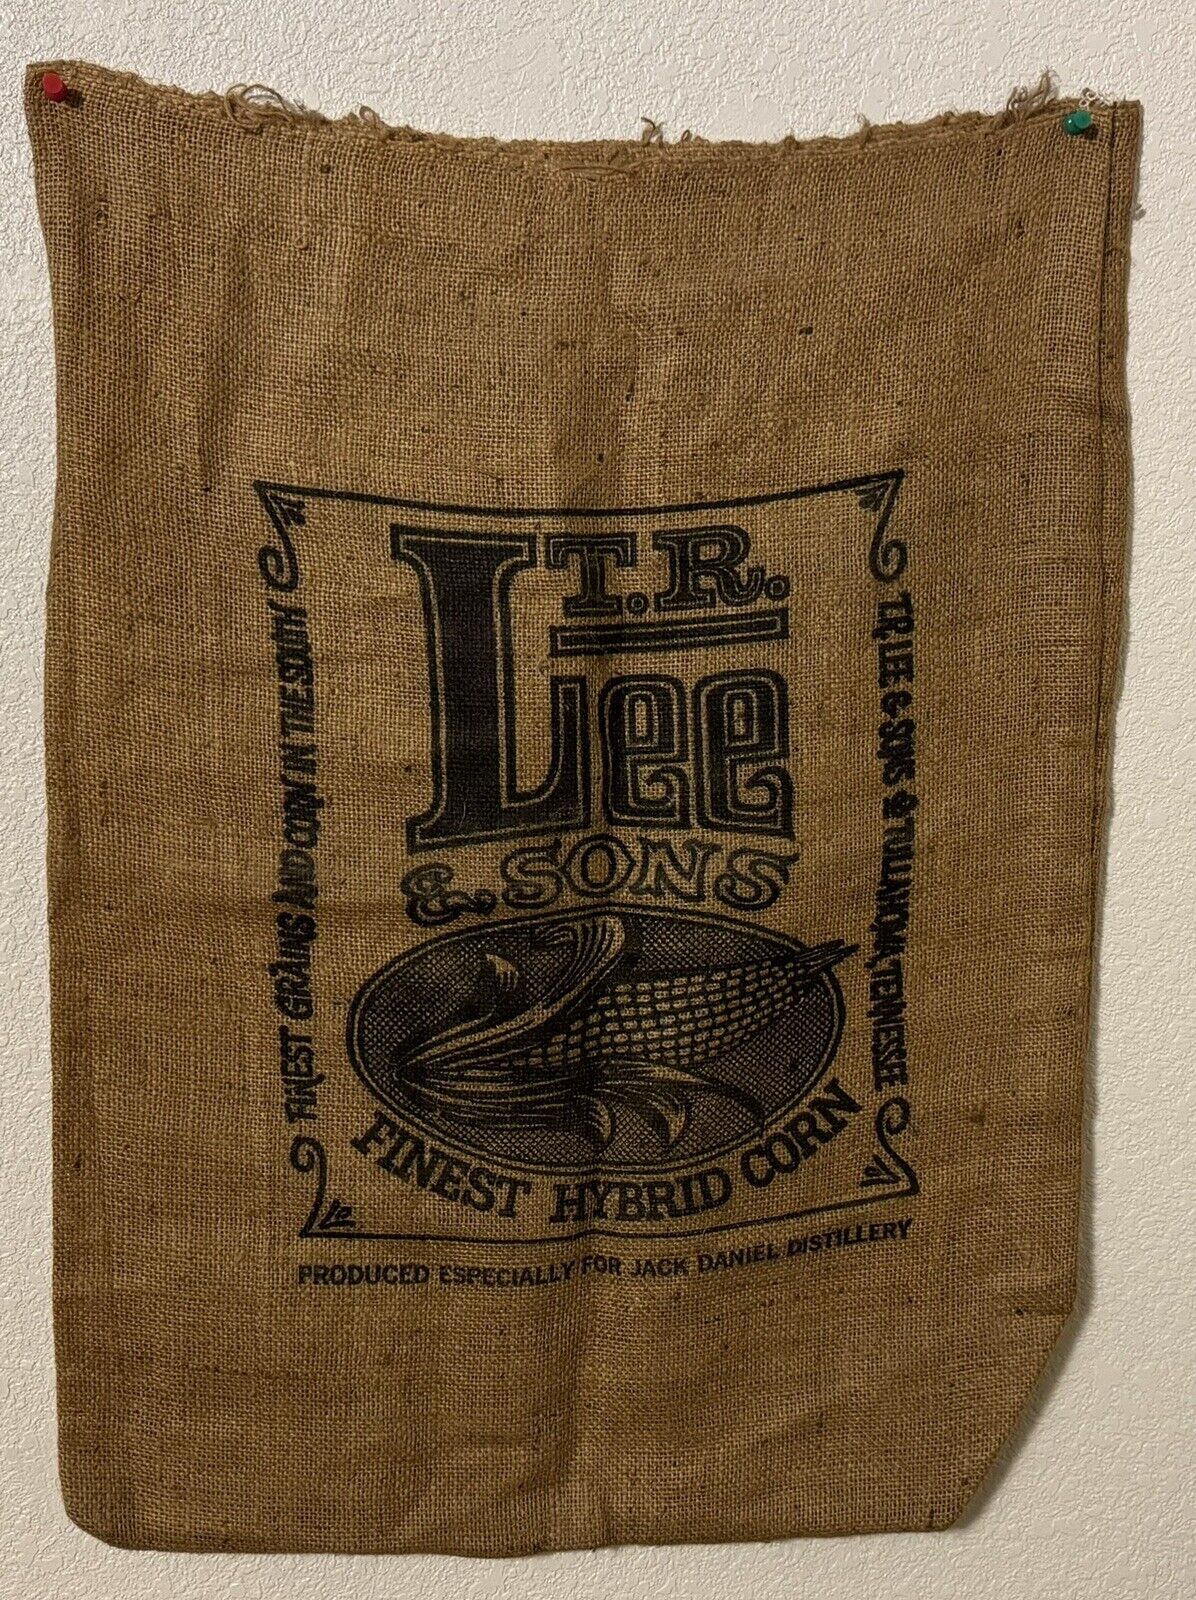 Rare Jack Daniel's Whiskey Vintage Burlap Corn Bag.